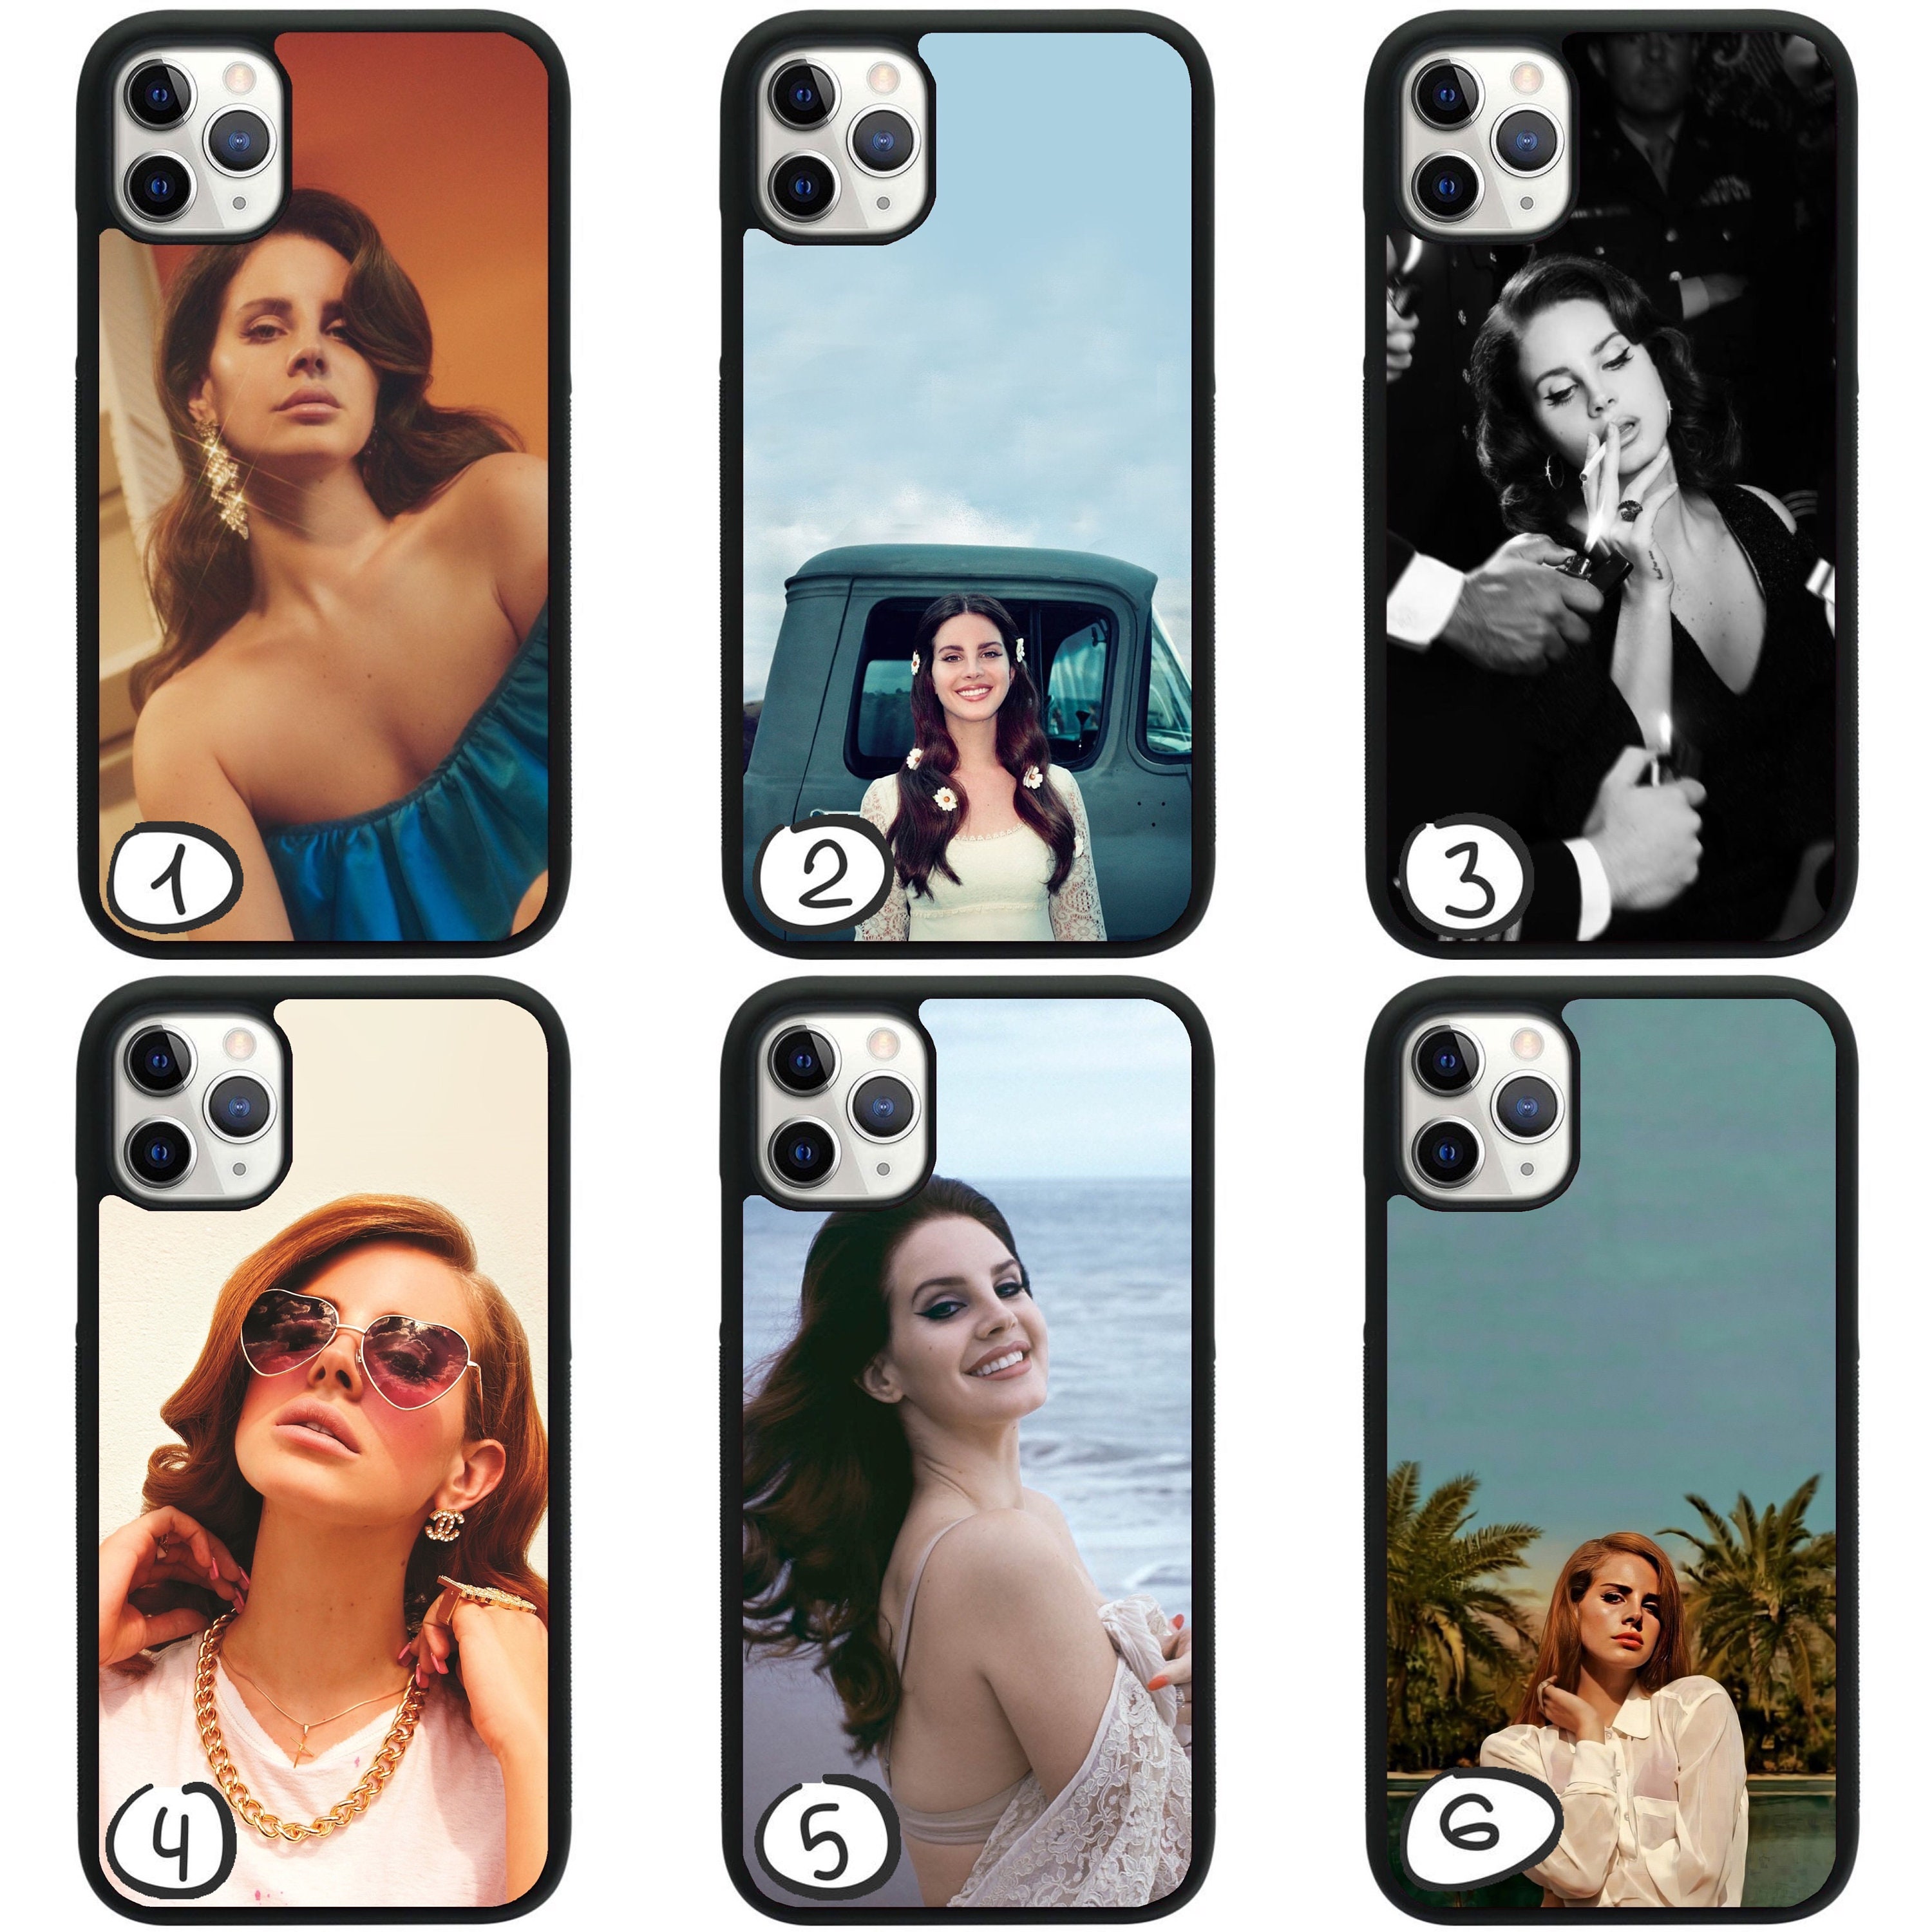 lana del rey sticker  Iphone case stickers, Collage phone case, Phone case  stickers